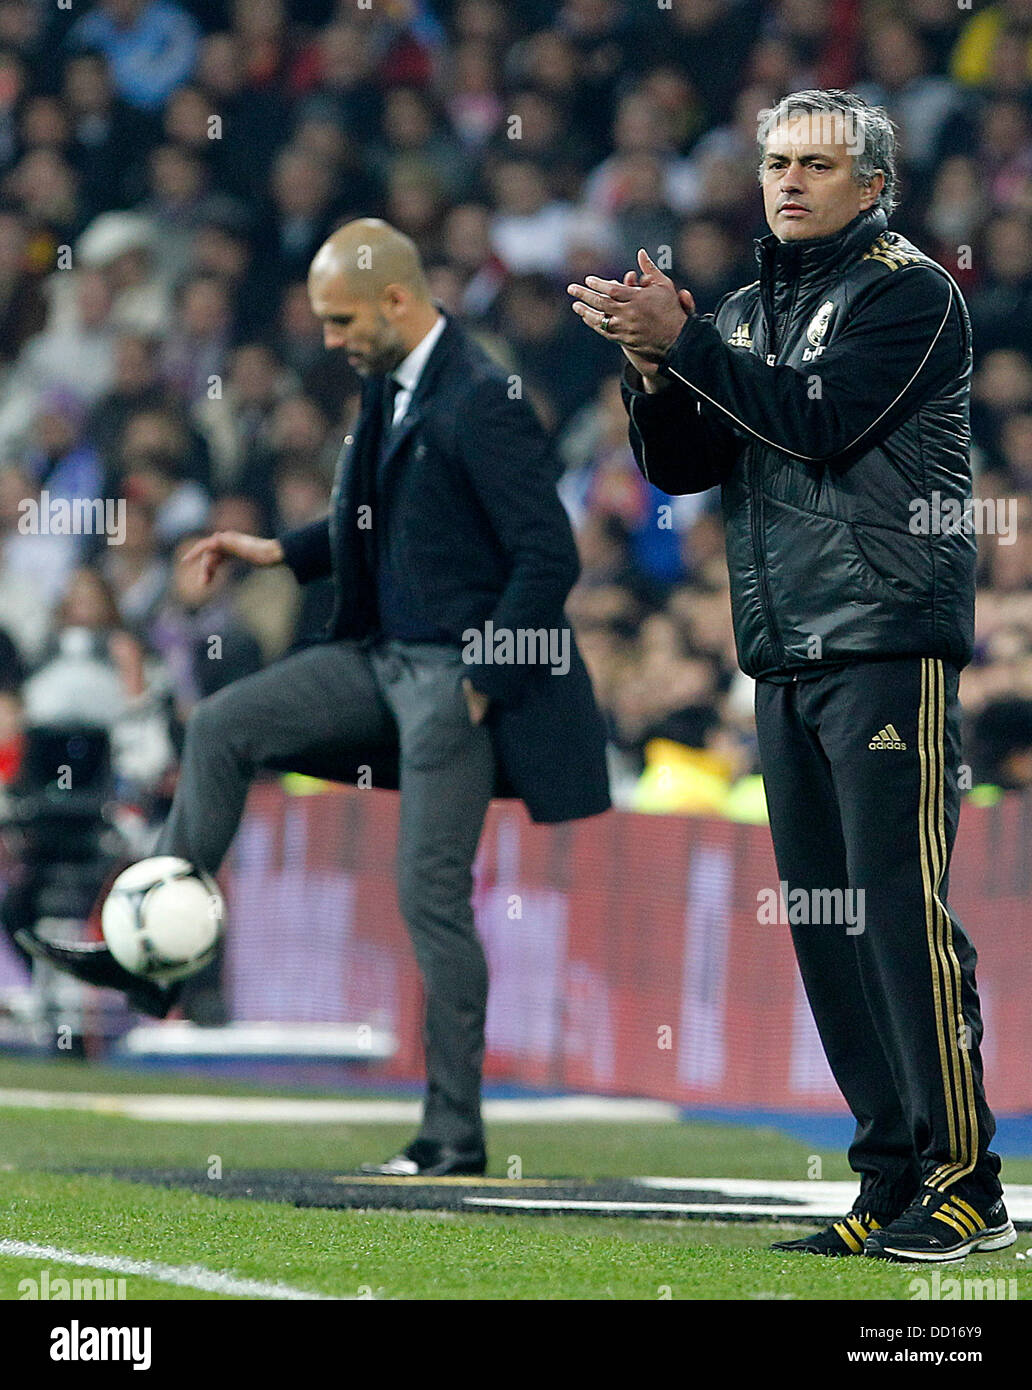 Real Madrid S Jose Mourinho R And Fc Barcelona S Coach Pep Stock Photo Alamy